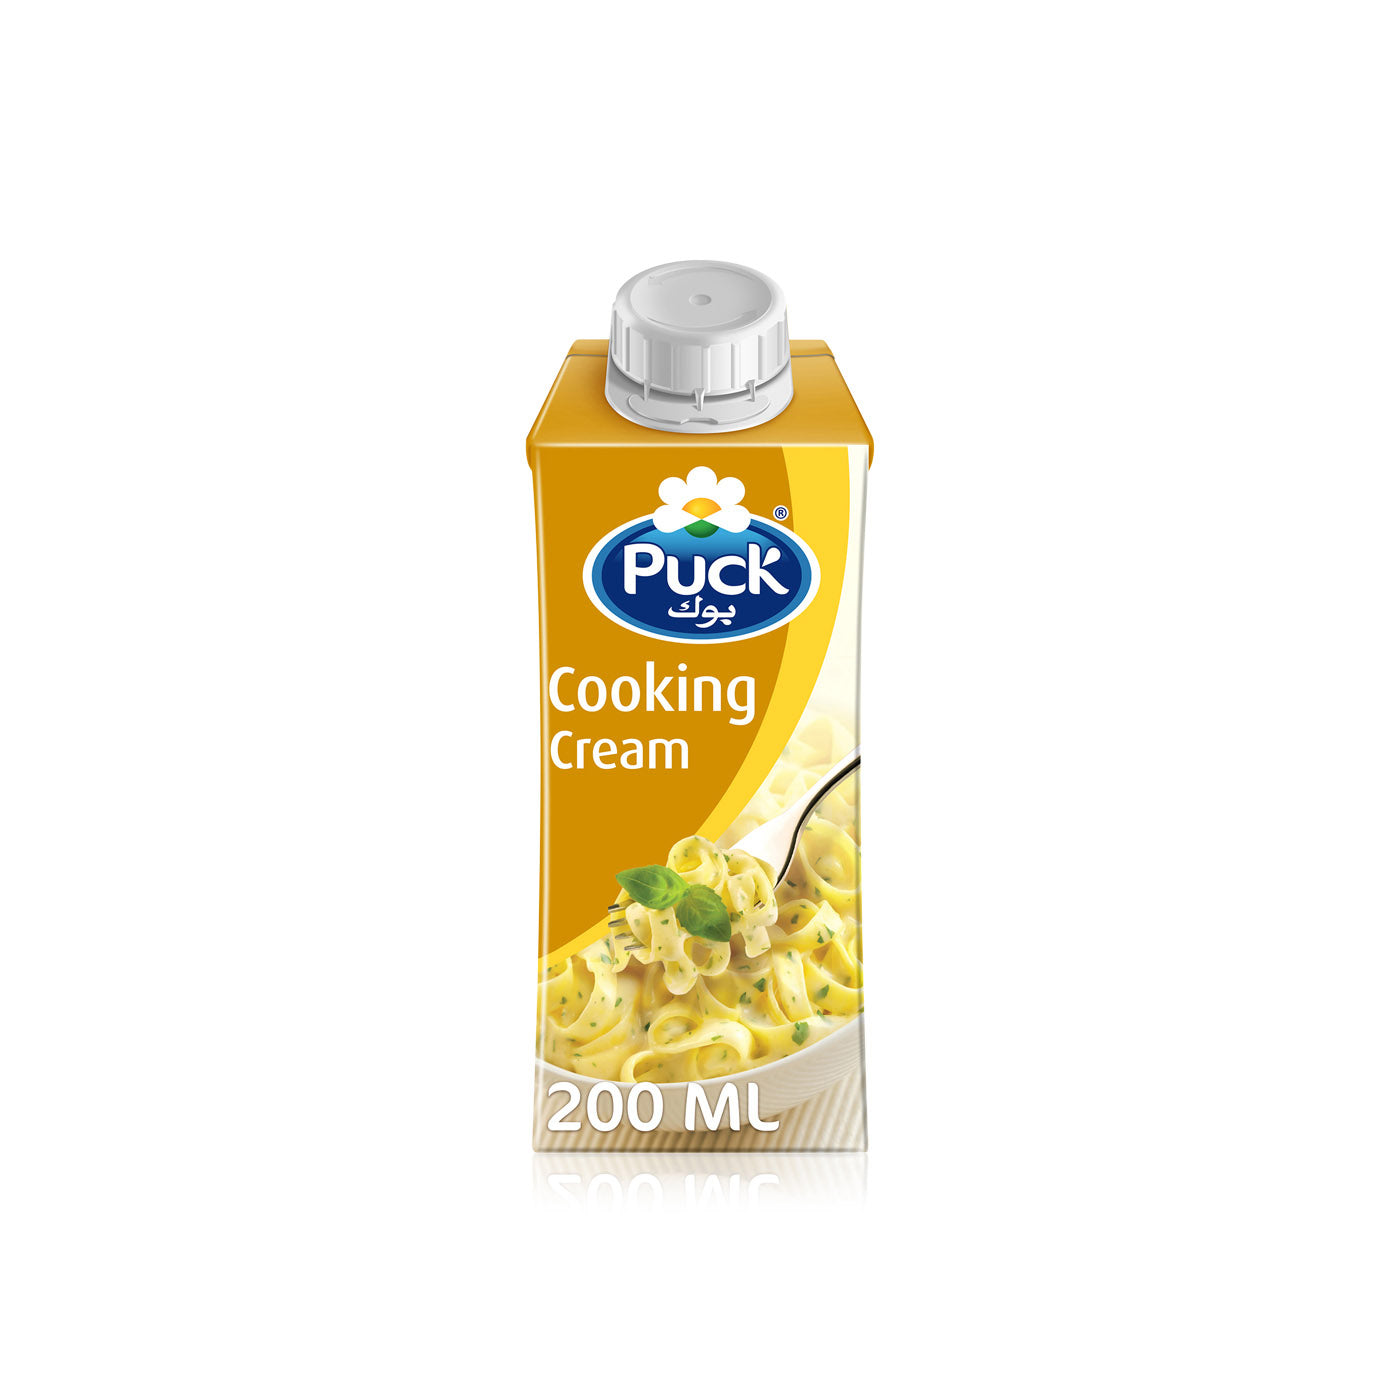 Puck Cooking Cream 200g